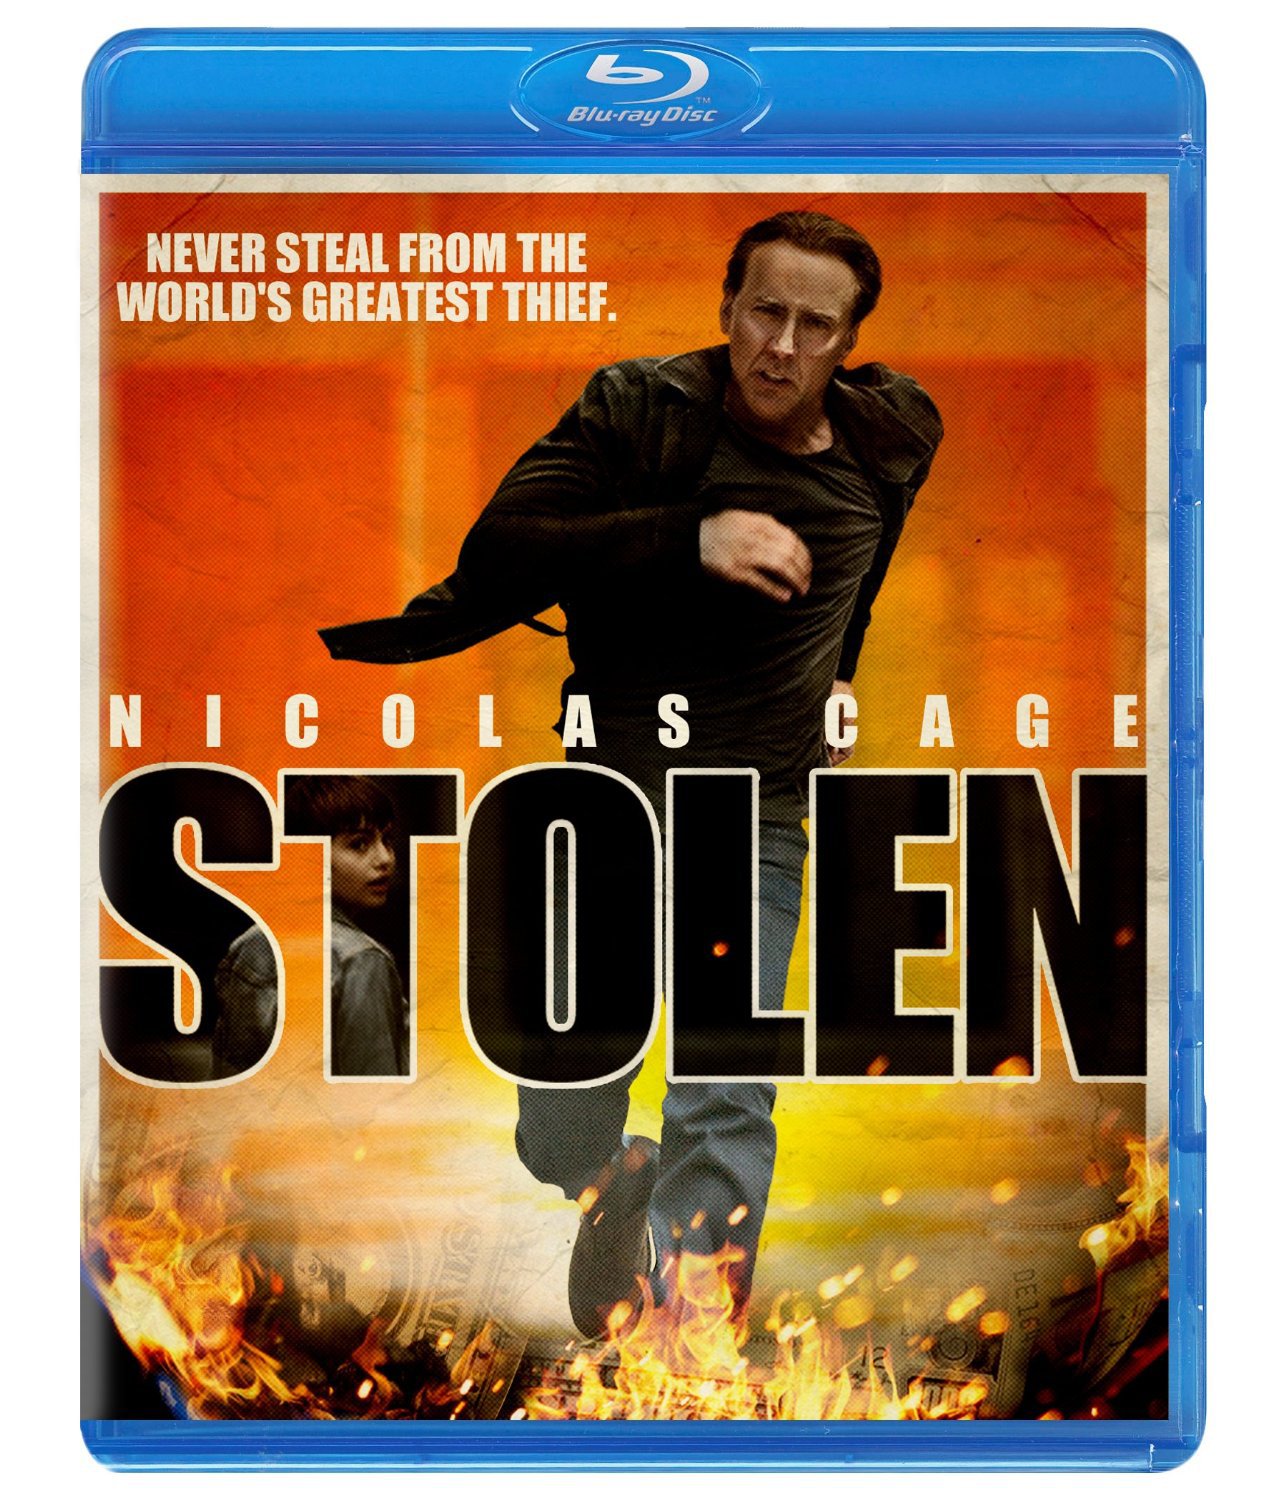 Stolen (2012)